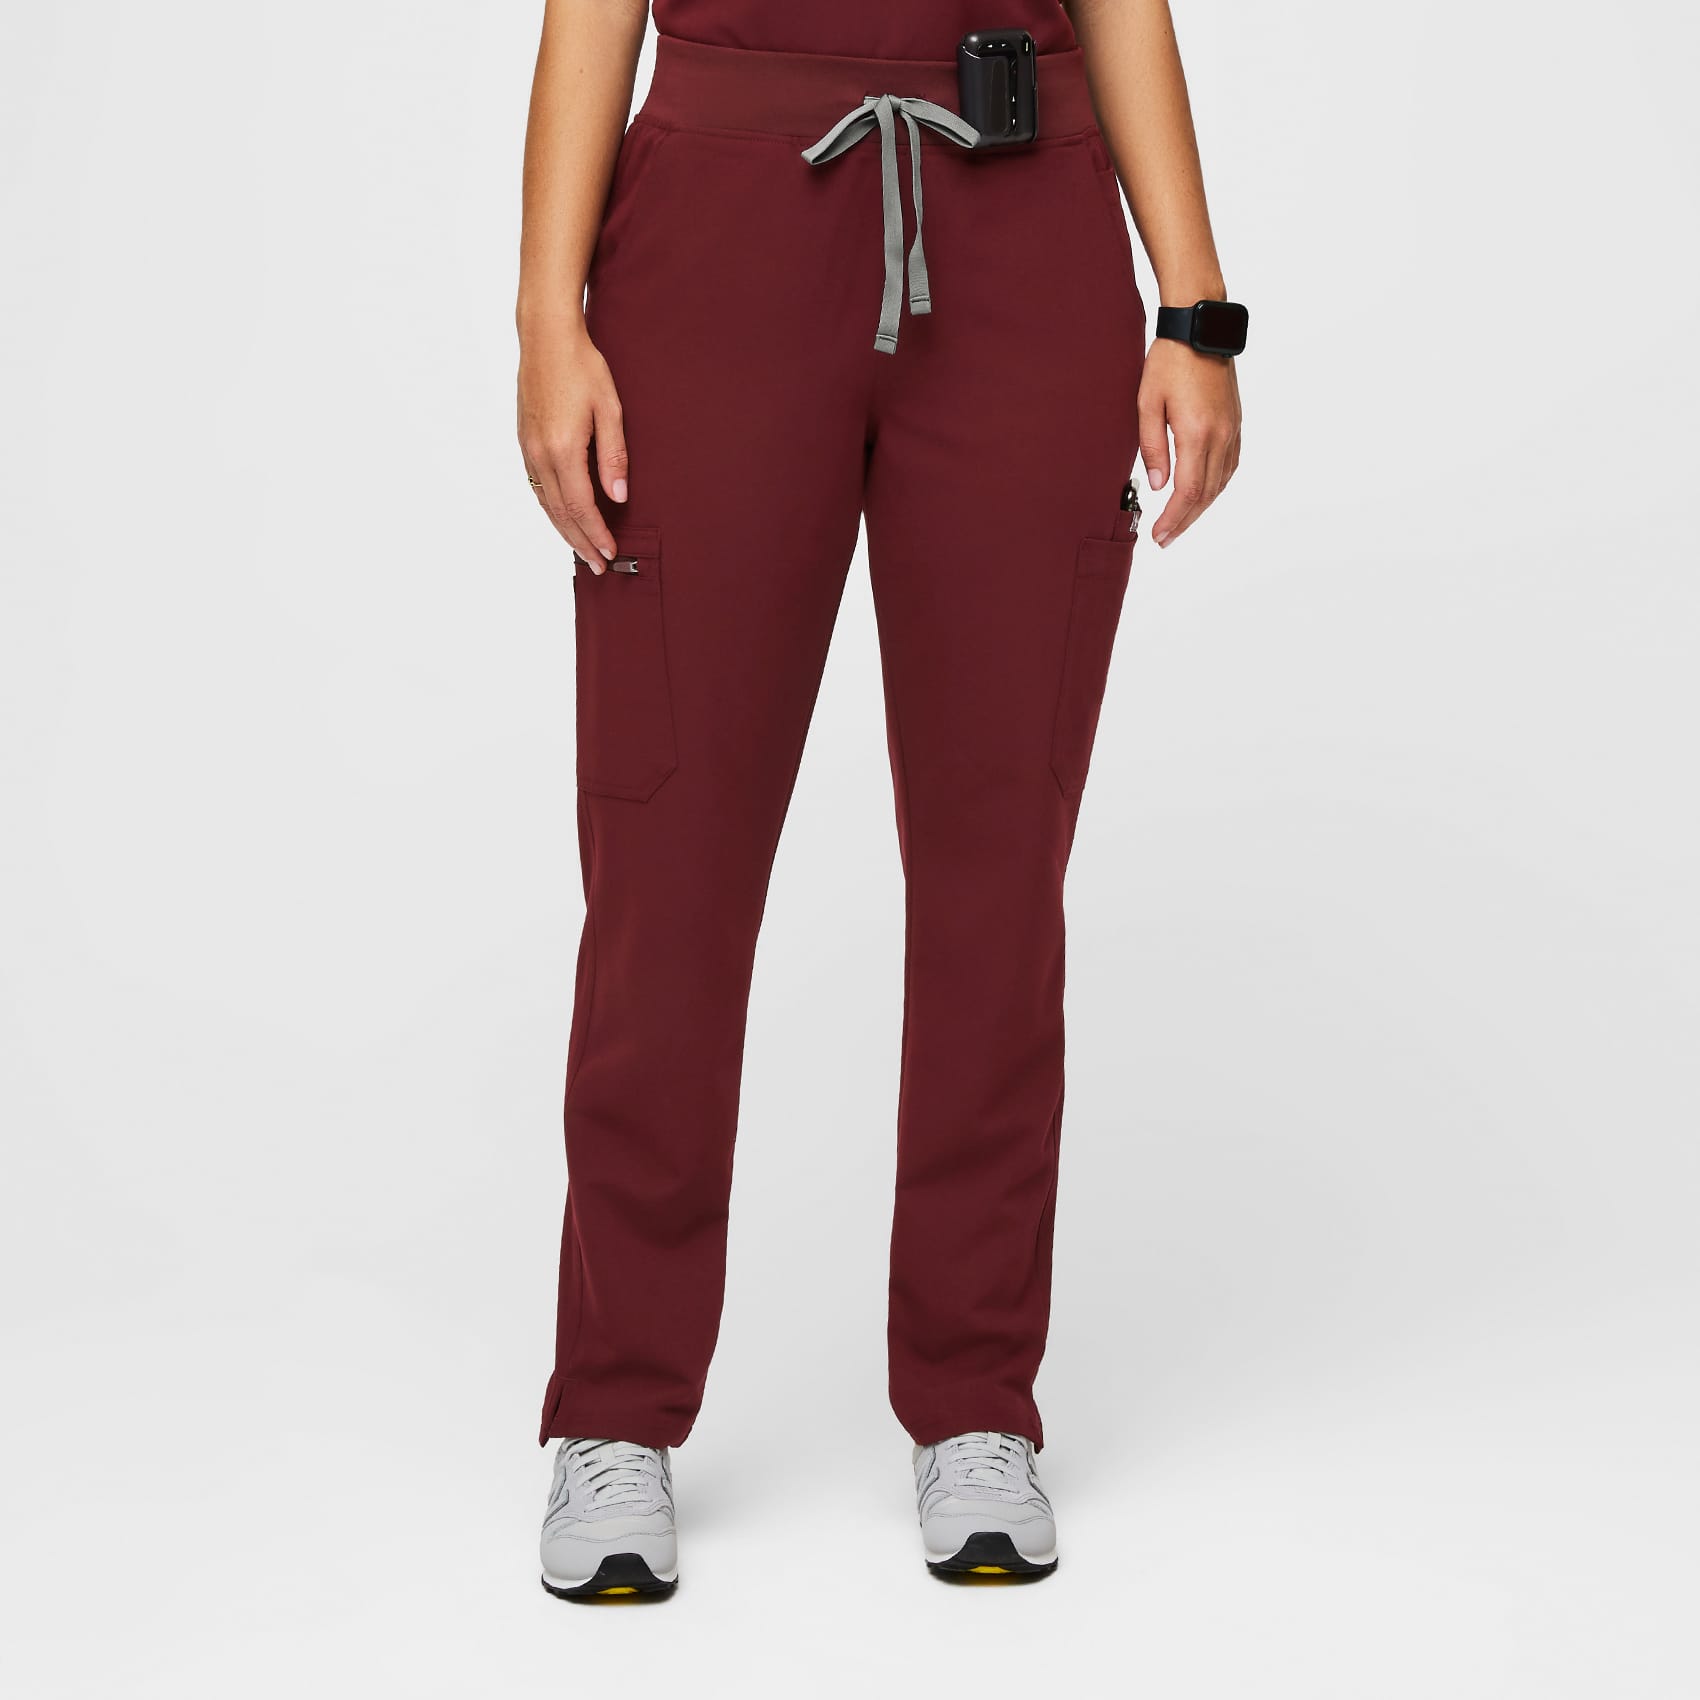 Old Navy Women's 6 Chino Pants Burgundy Red Slim Ankle Stretch NWT | eBay